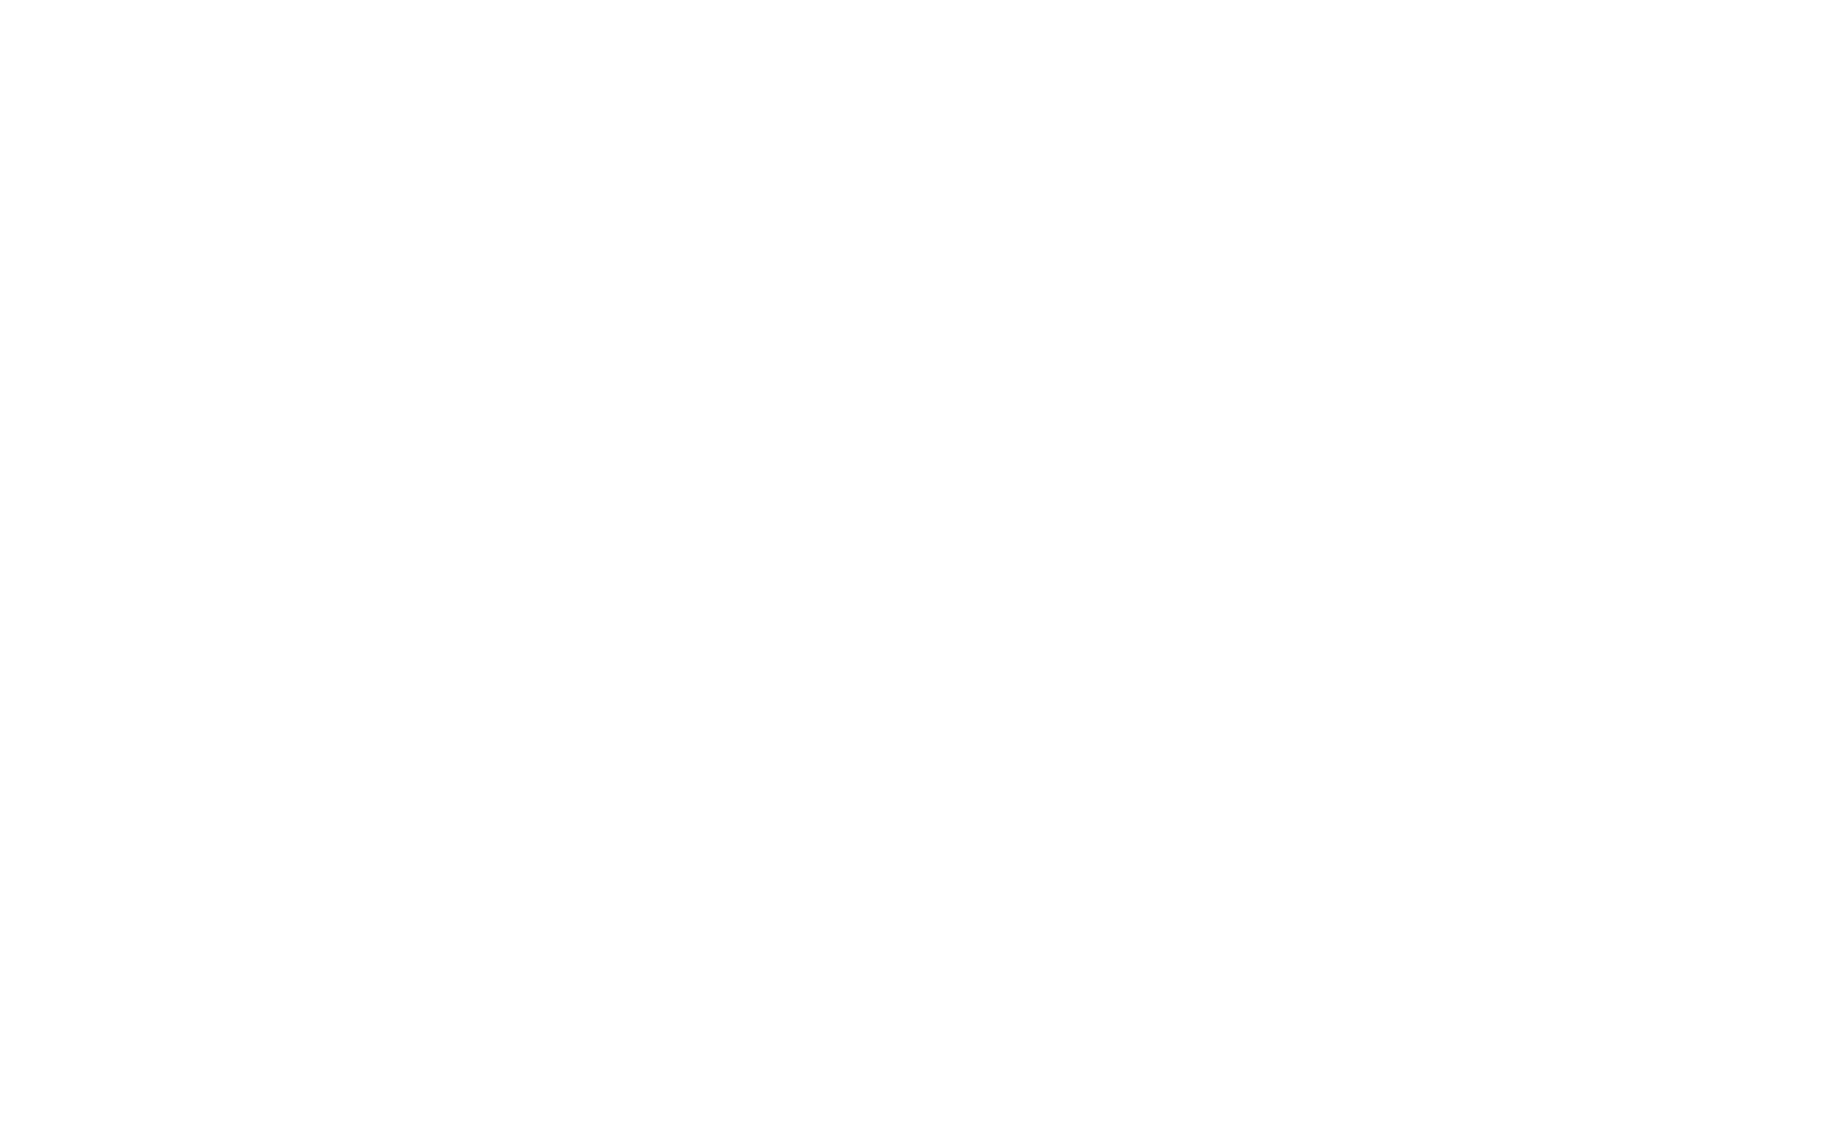 ZDC Financial